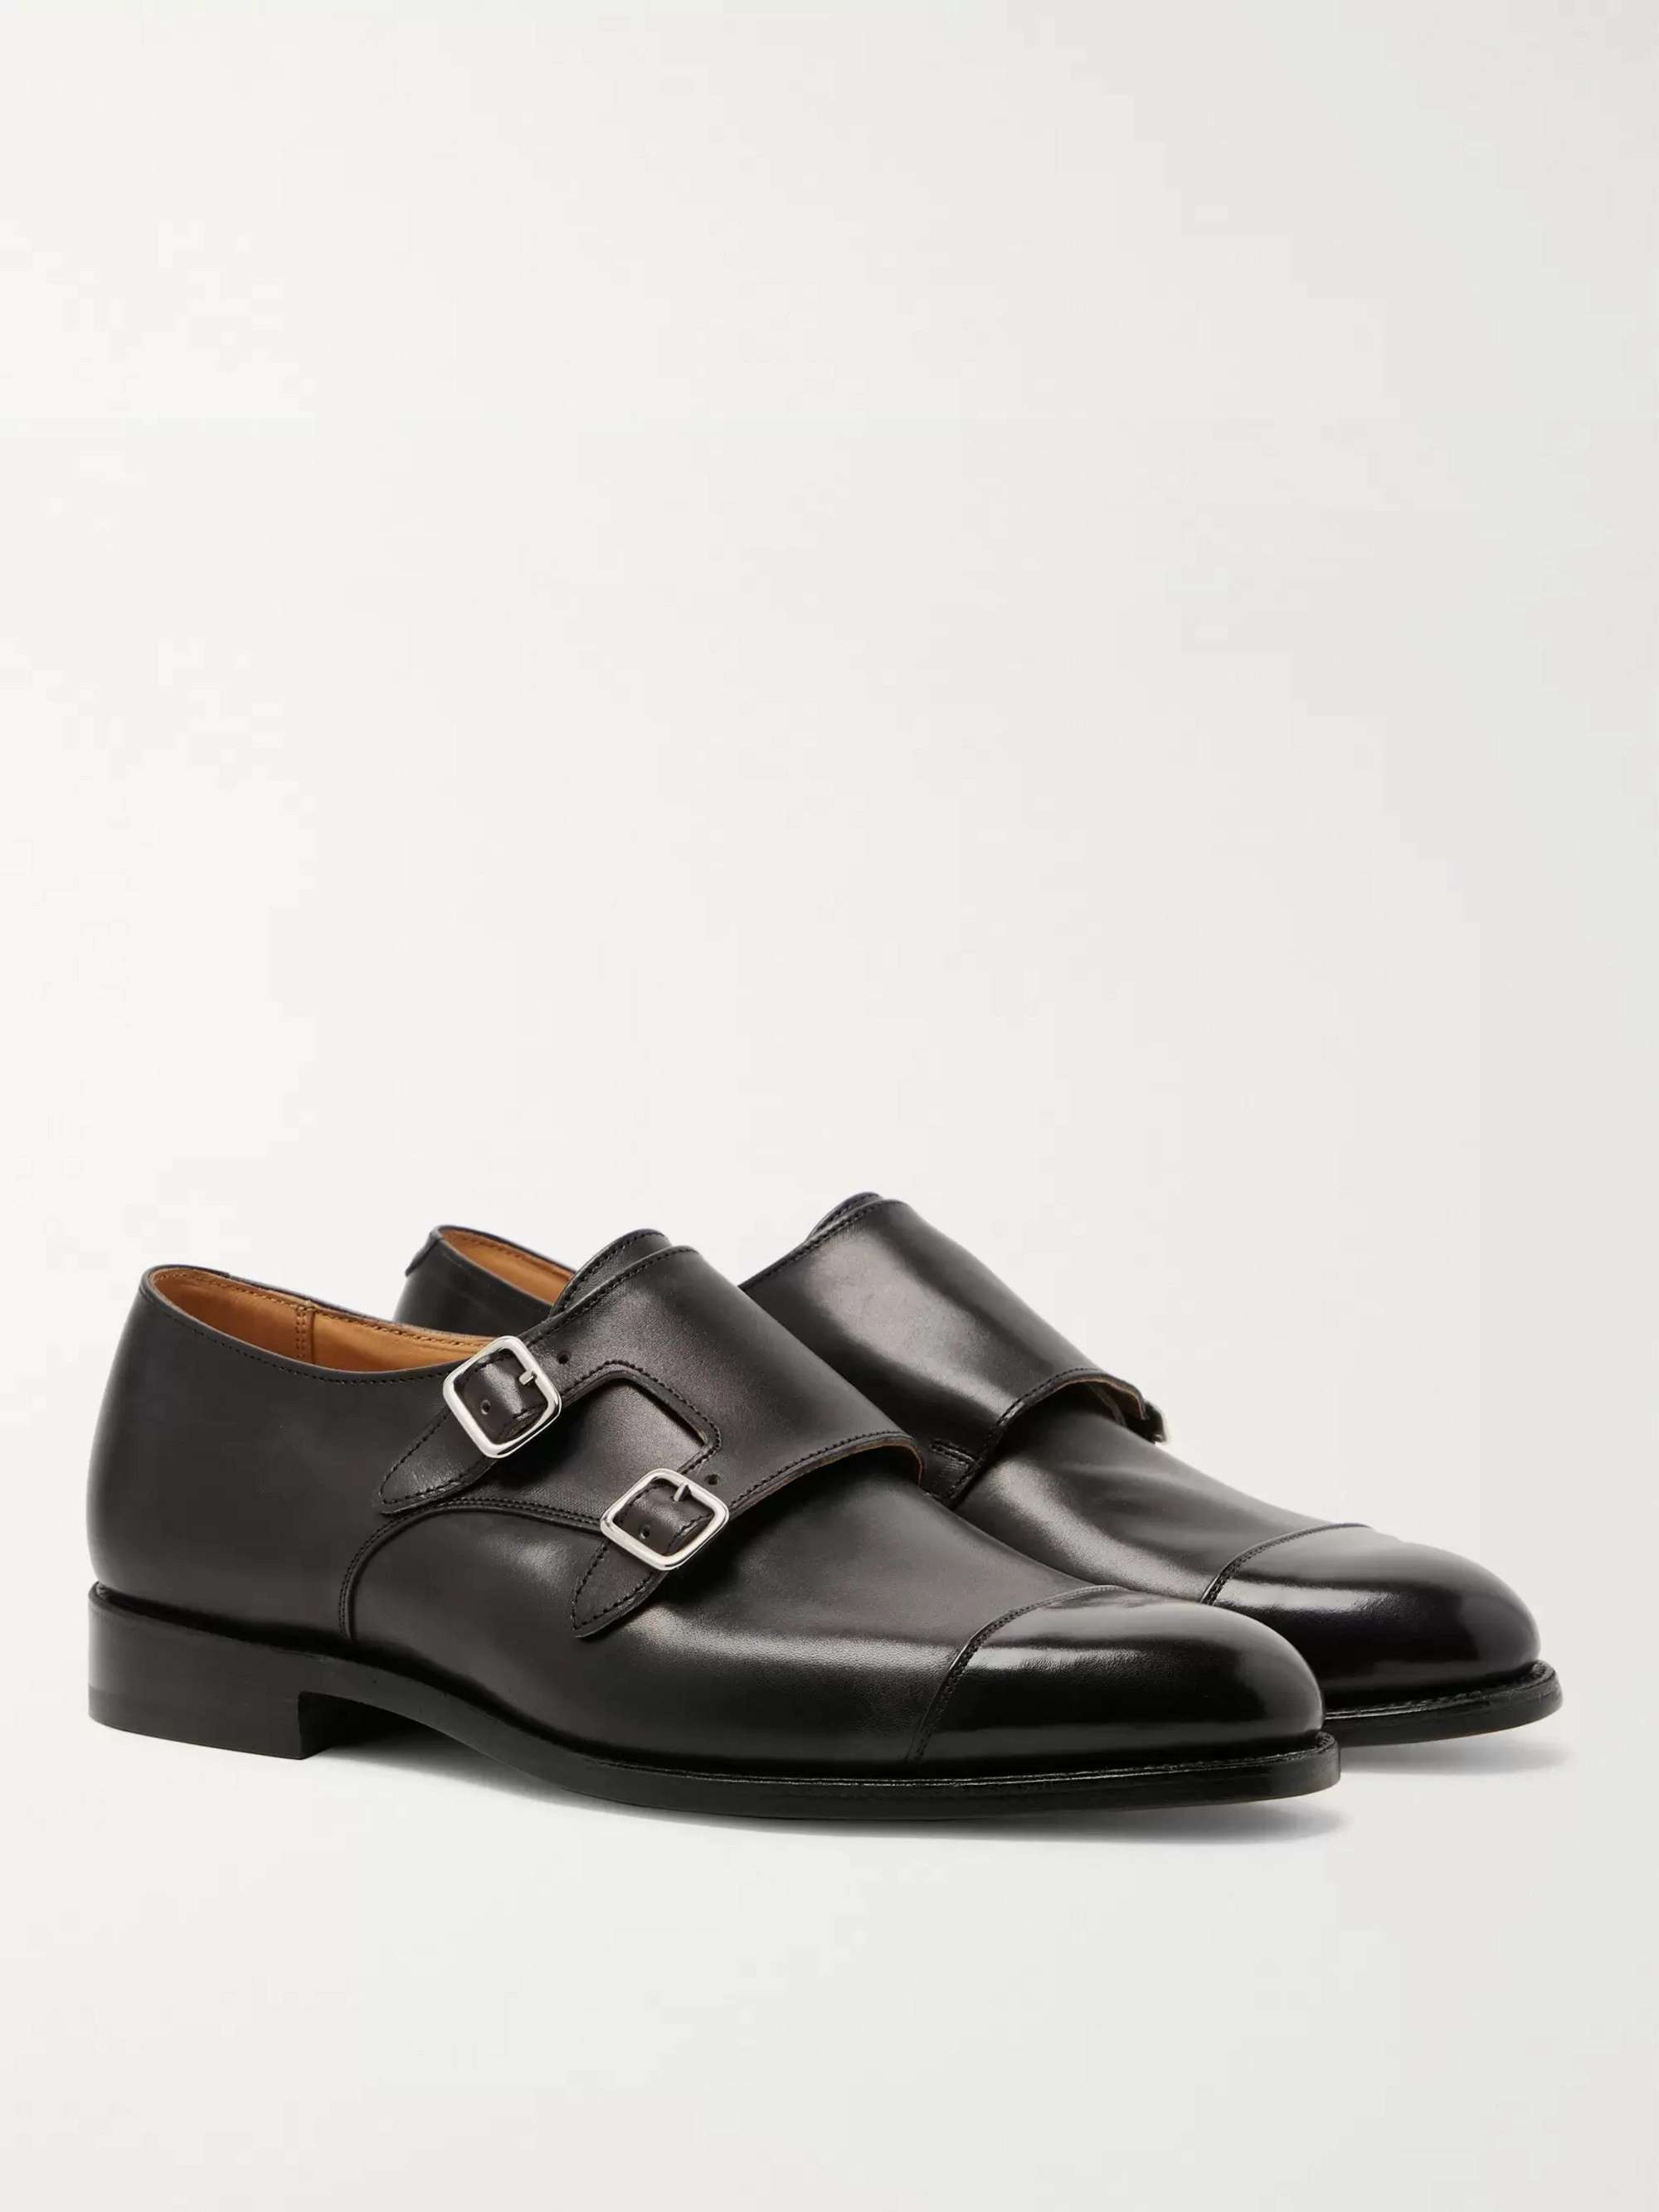 TRICKER'S Leavenworth Leather Monk-Strap Shoes